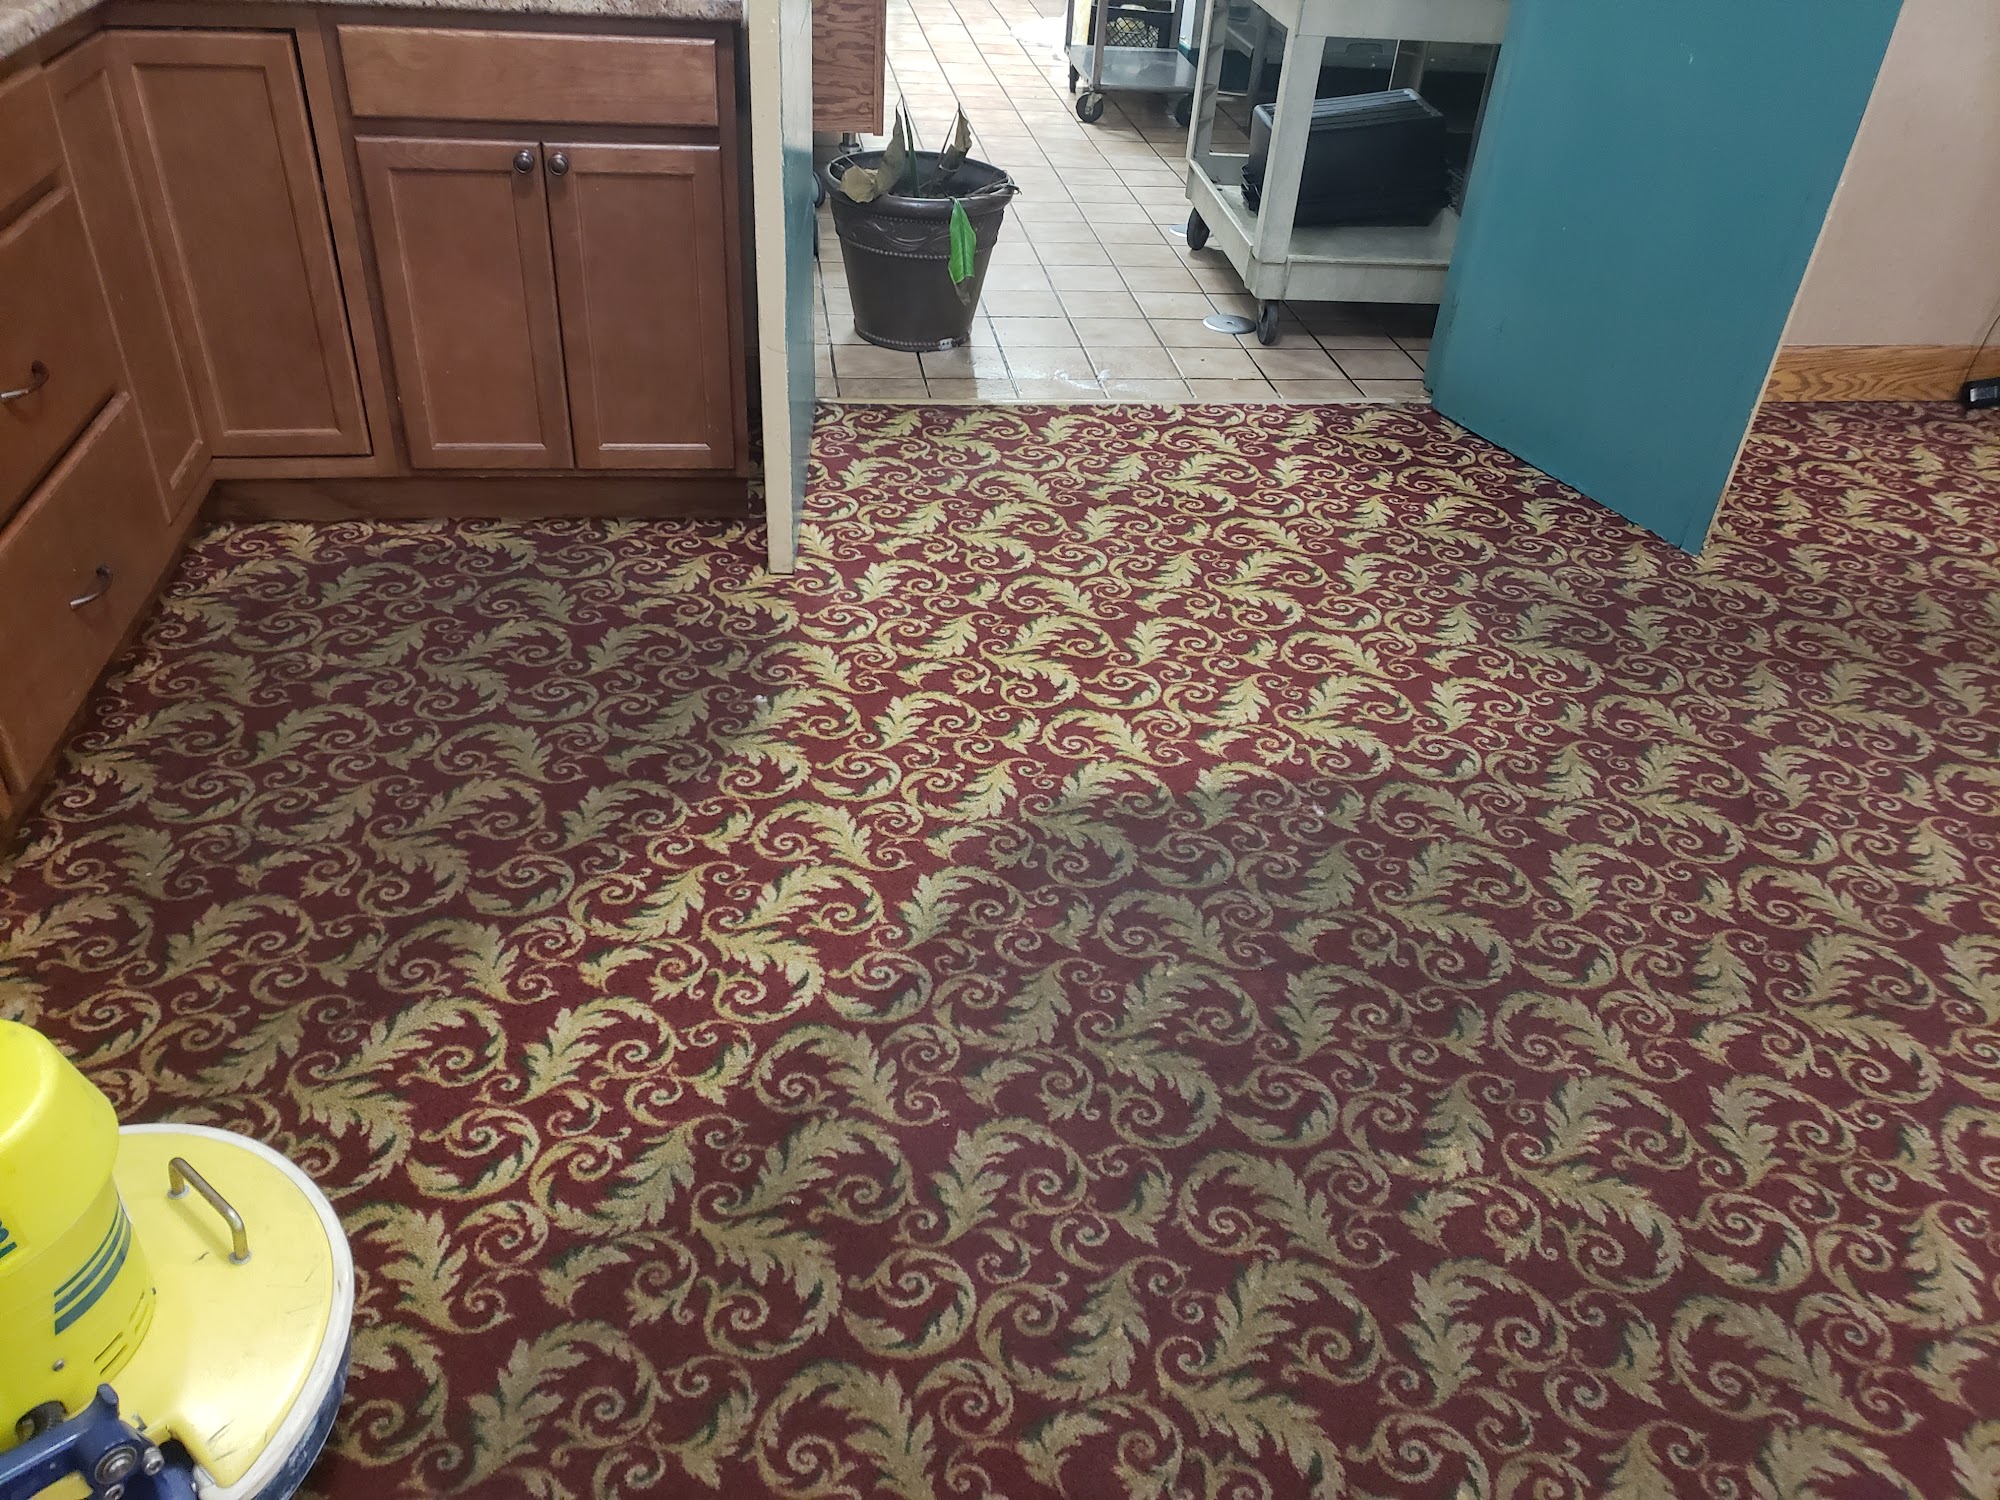 Griffin Flooring & Carpet Cleaning 1409 Polk St, Chillicothe Missouri 64601